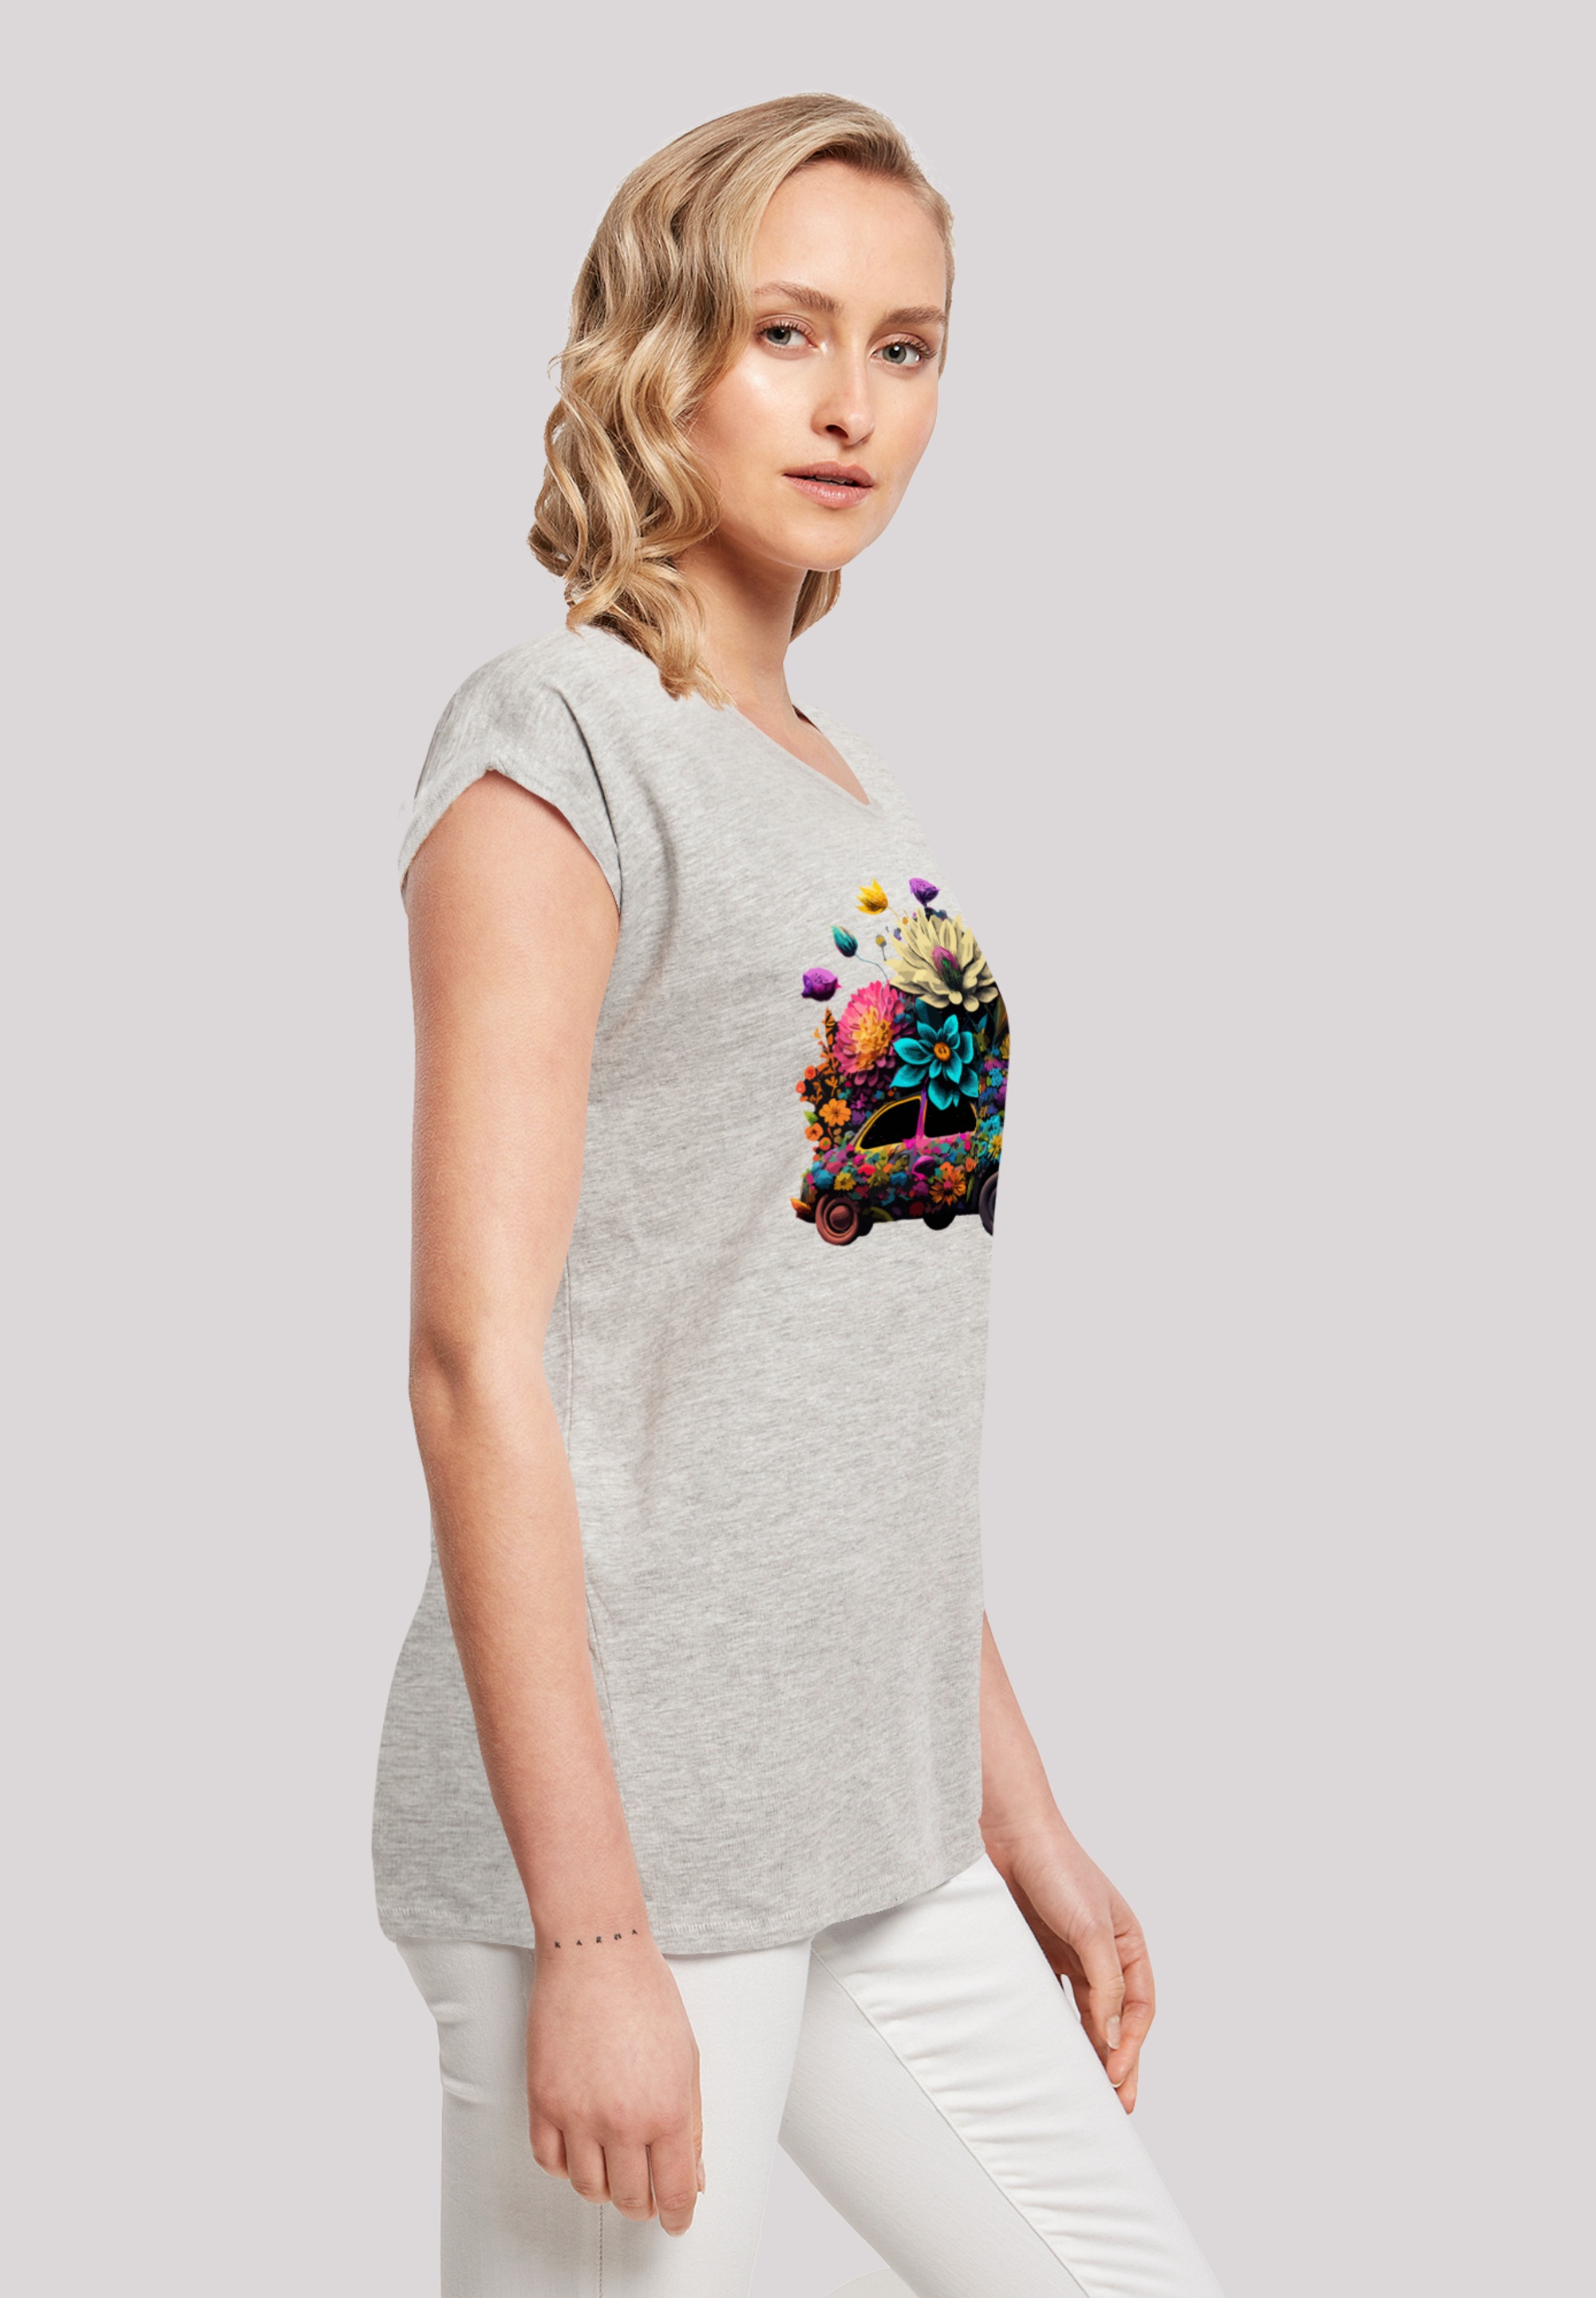 F4NT4STIC T-Shirt »Blumen Auto Tee«, Print kaufen